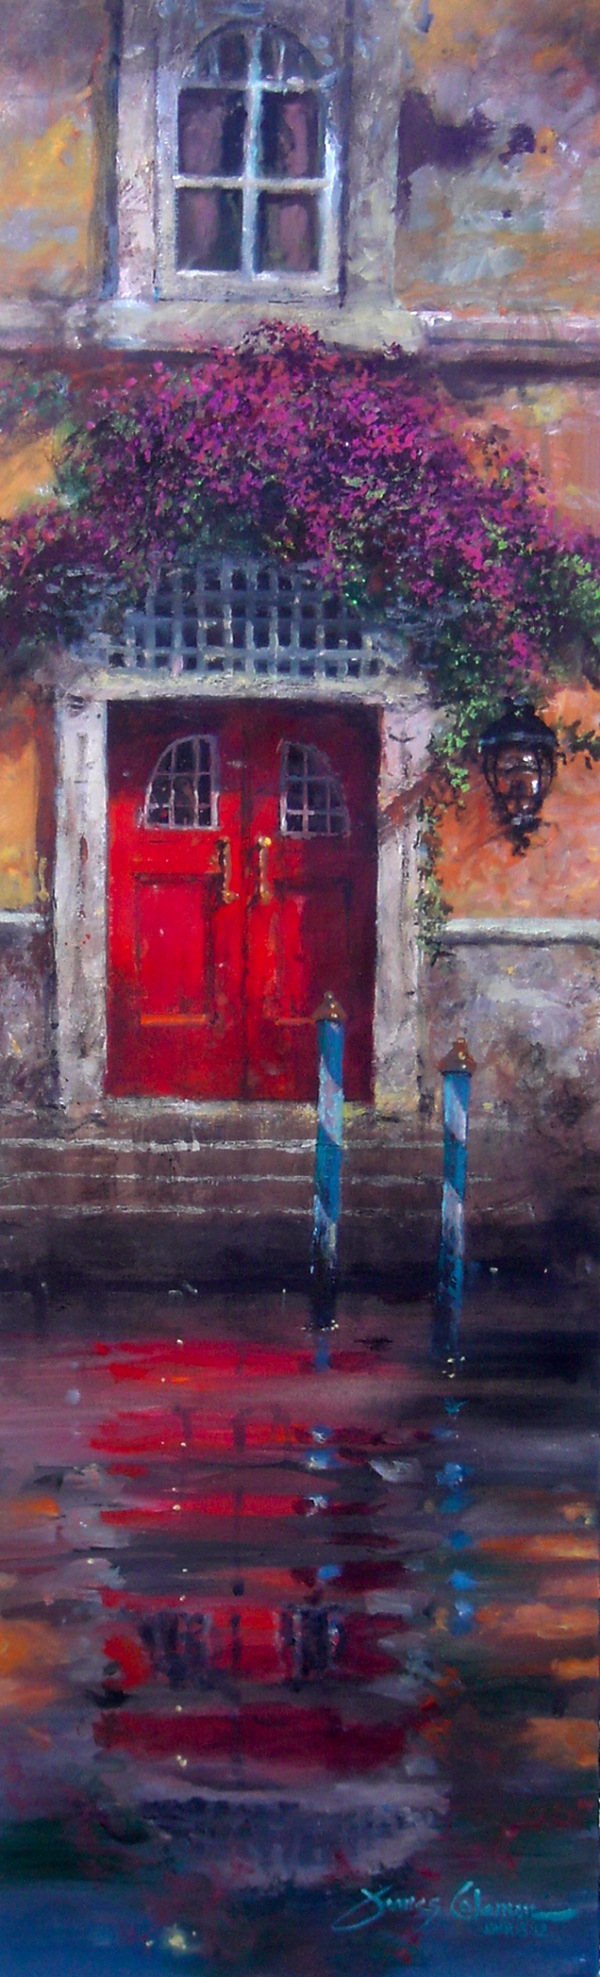 red door reflection painting - 2011 red door reflection art painting